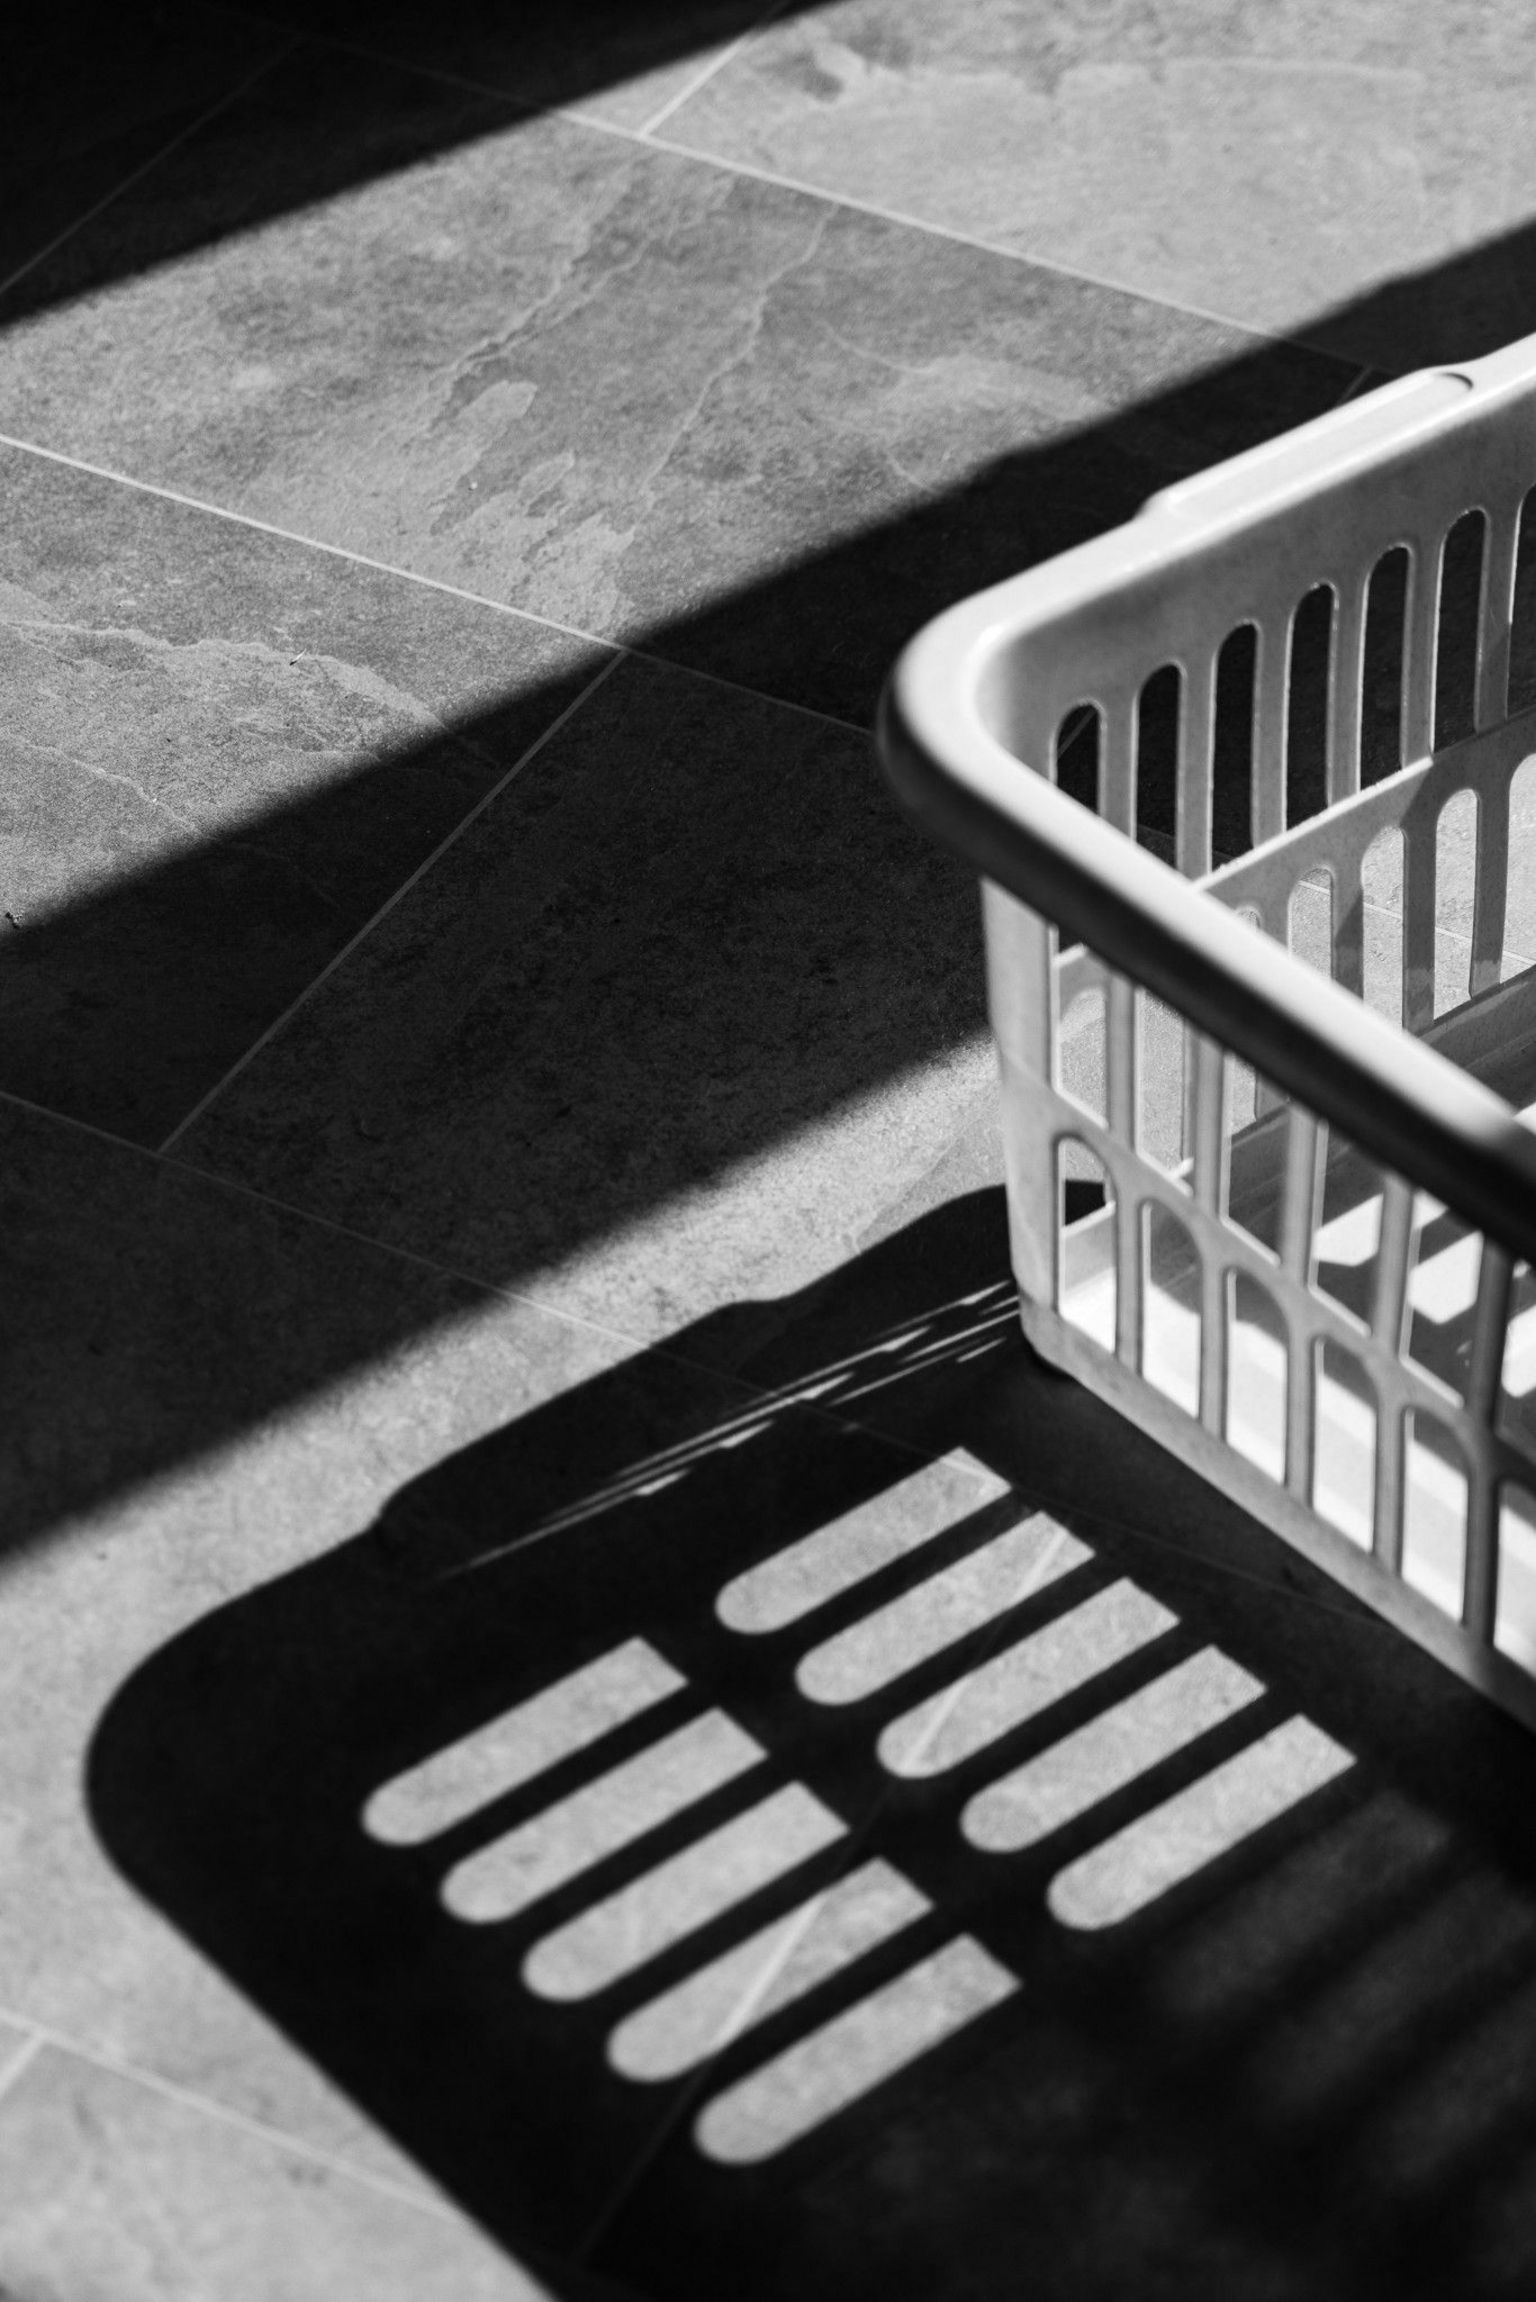 Shadow of a washing basket